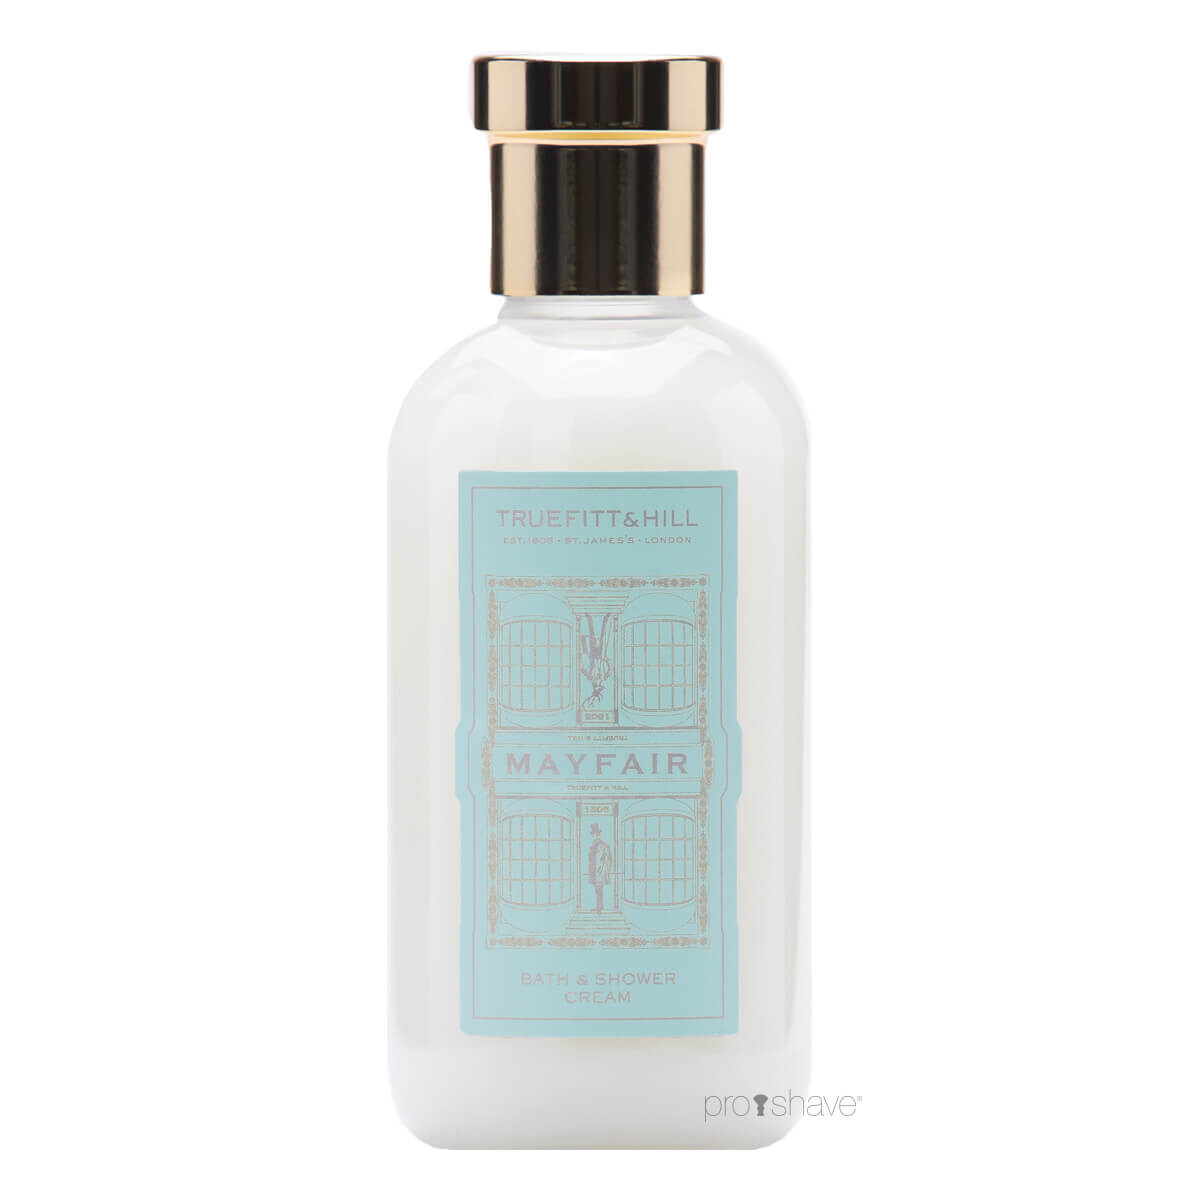 5: Truefitt & Hill Bath and Shower Cream, Mayfair, 200 ml.